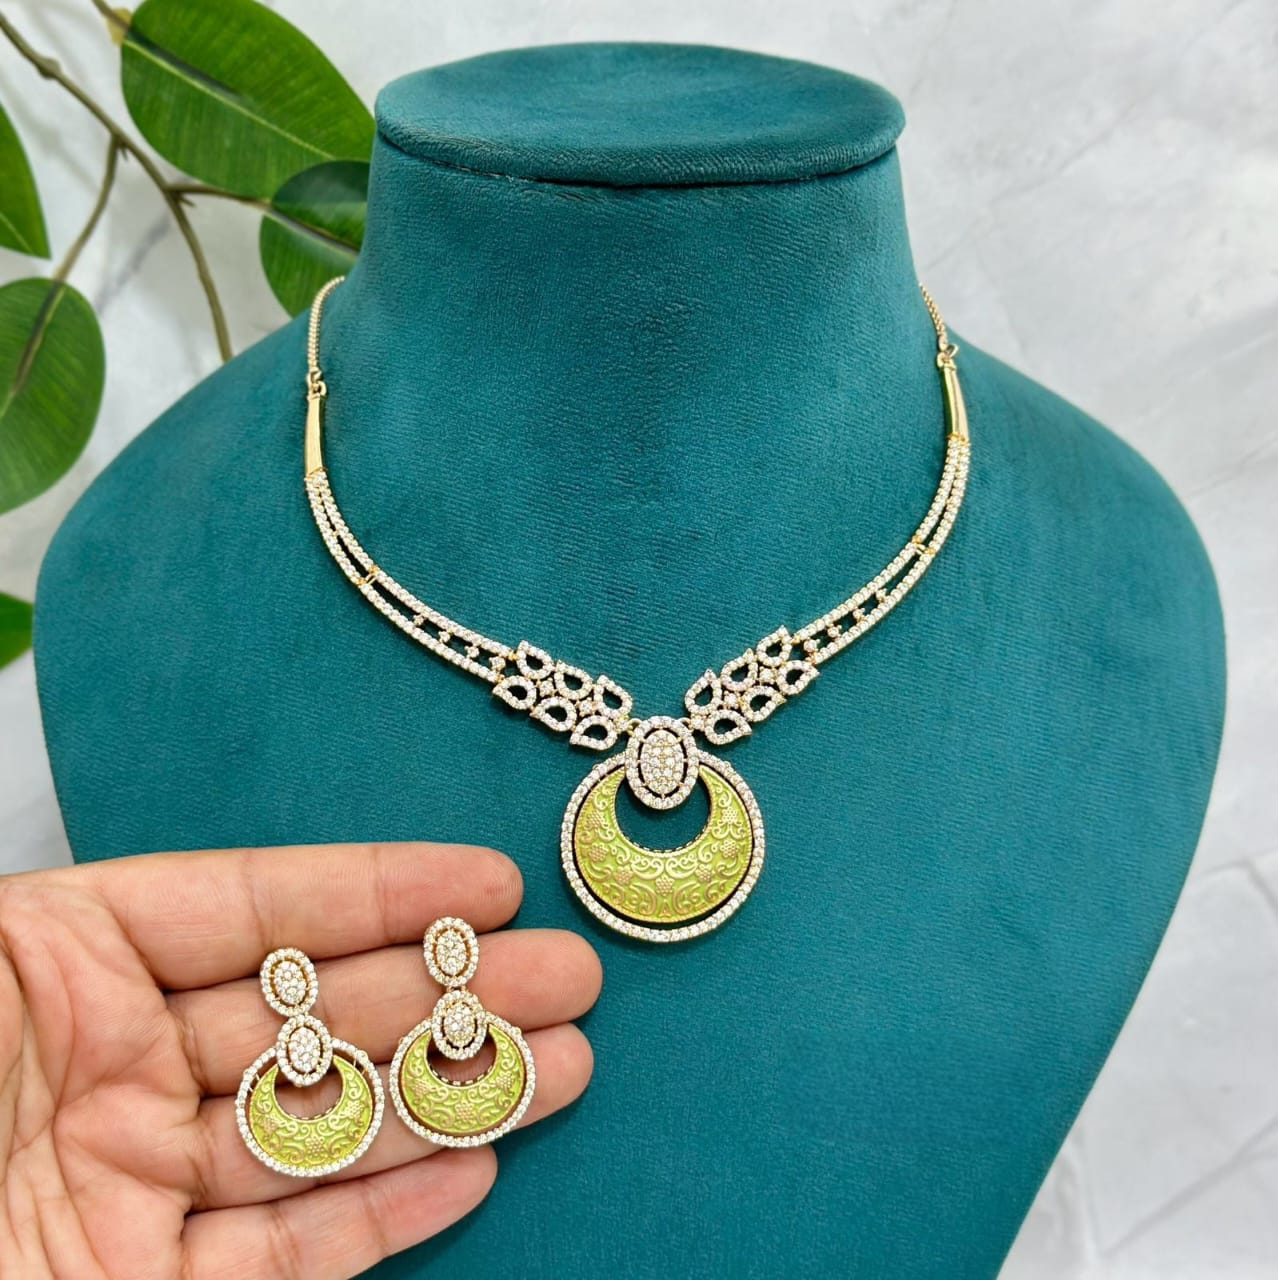 Chandbali Style American Diamond Short Necklace with Matching Earrings Jewelry Set